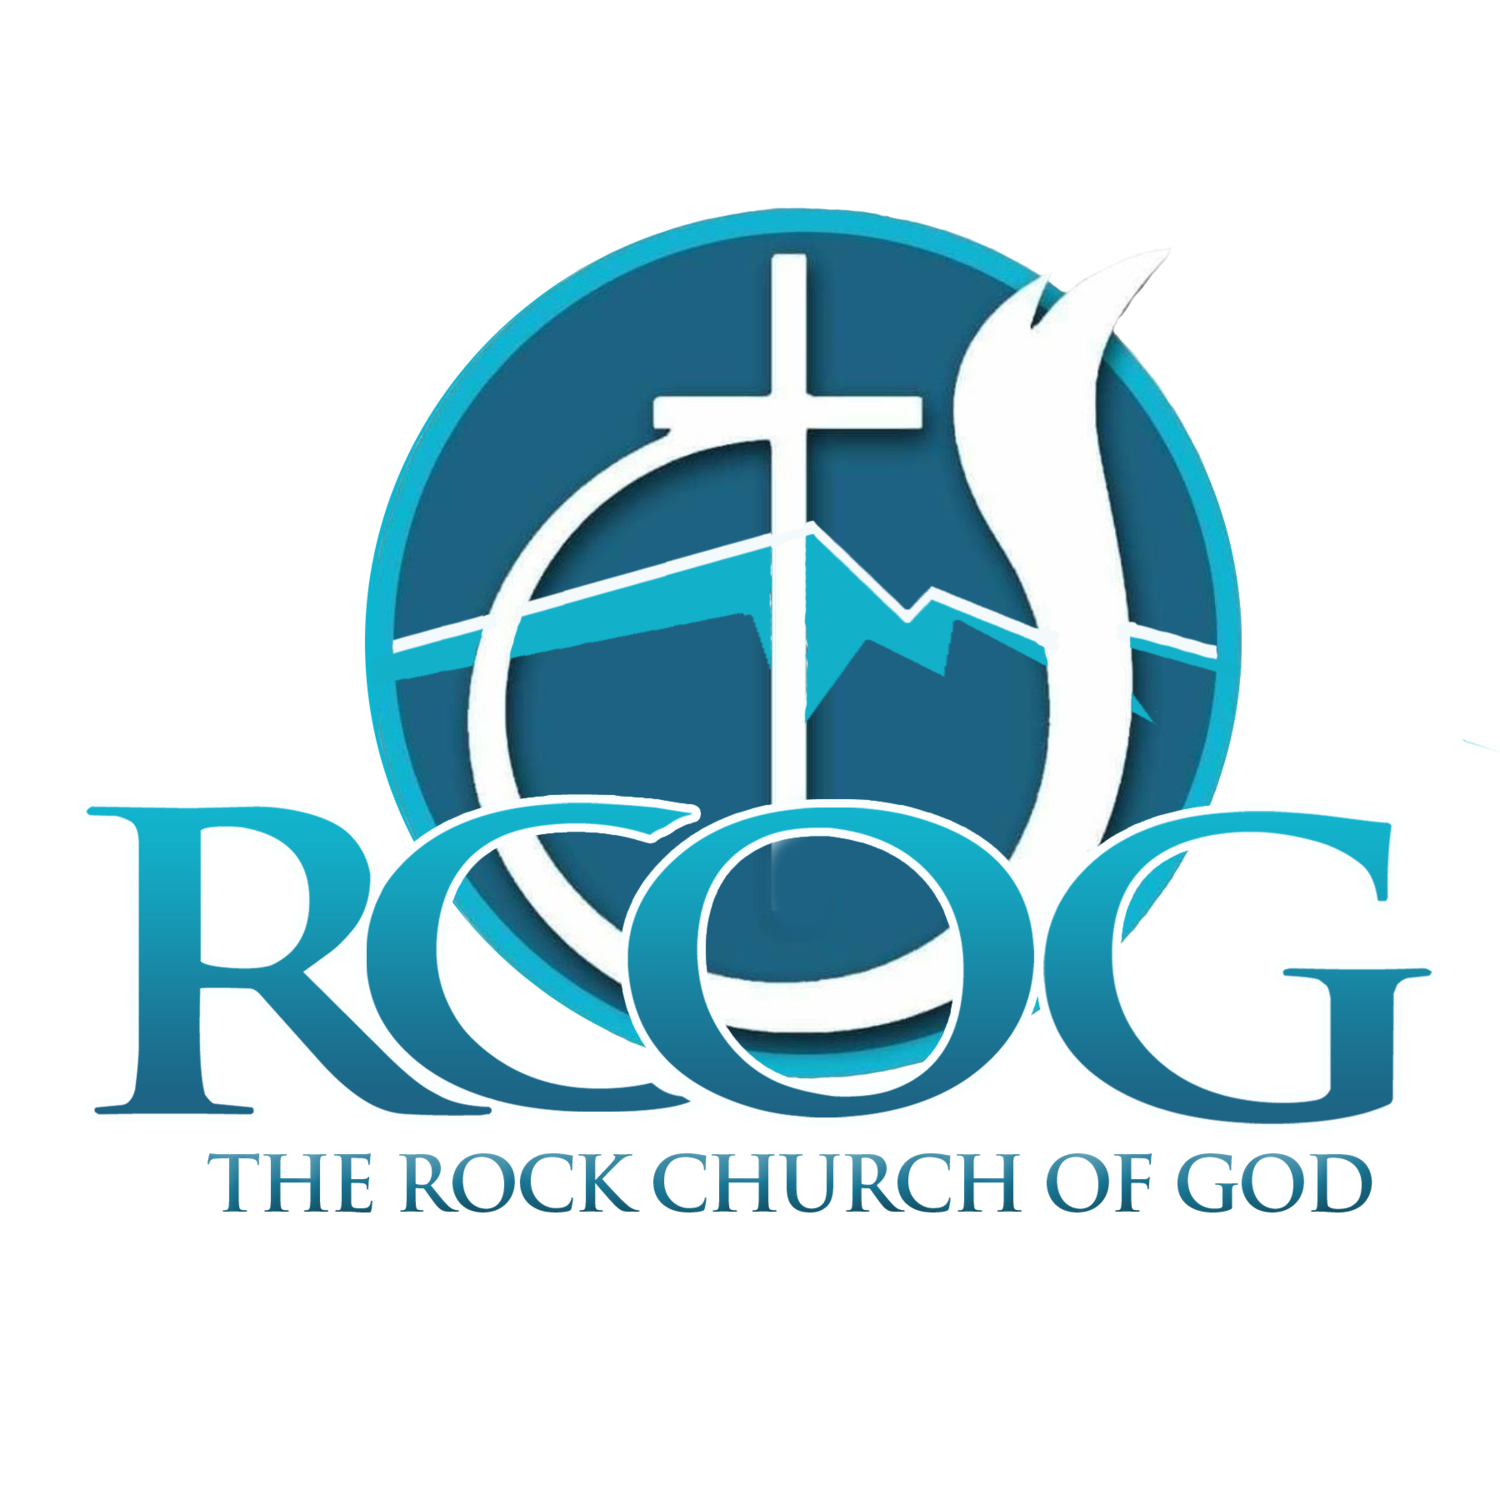 The Rock Church of God Lumberton NC